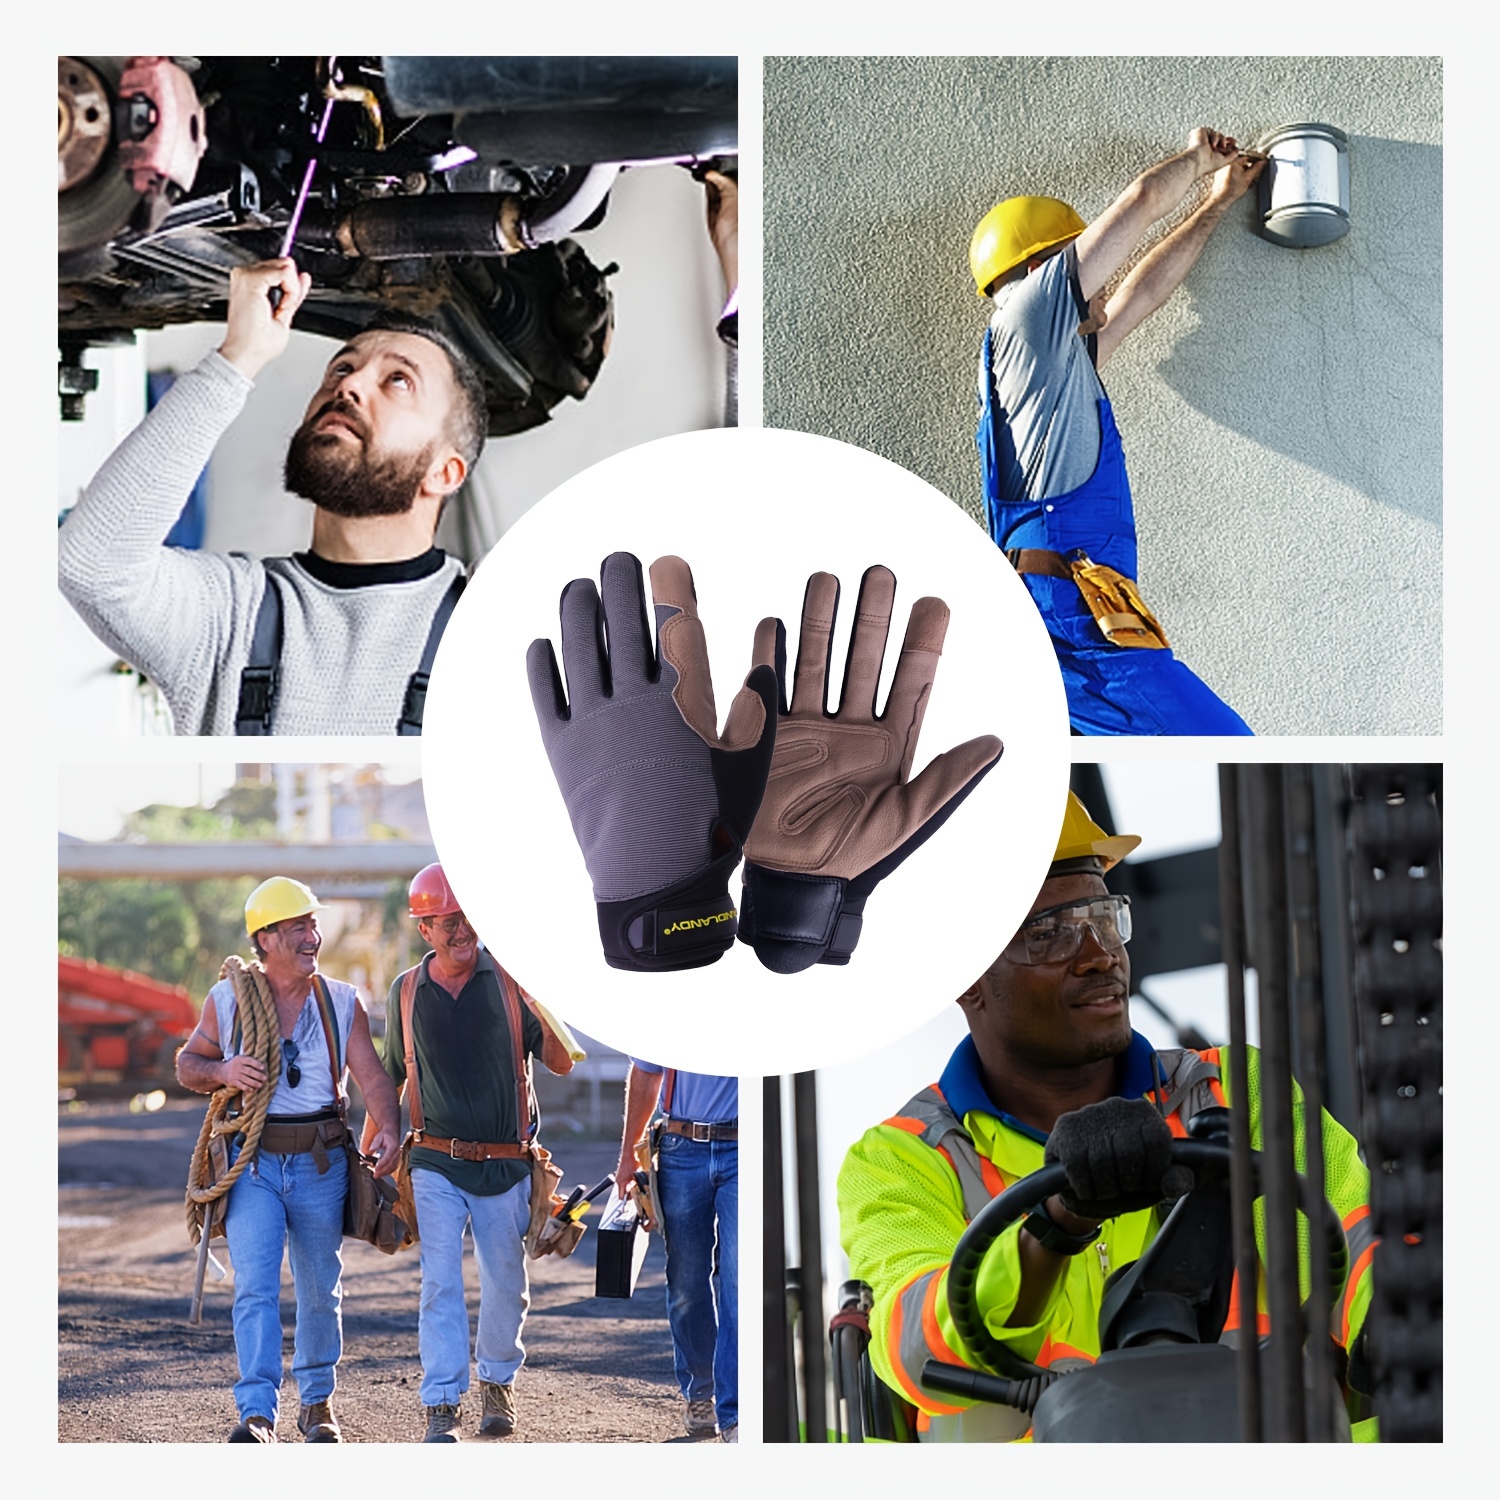 HANDLANDY Men Leather Gardening Gloves, Utility Work Gloves for Mechanics,  Construction, Driver, Dexterity Breathable Design